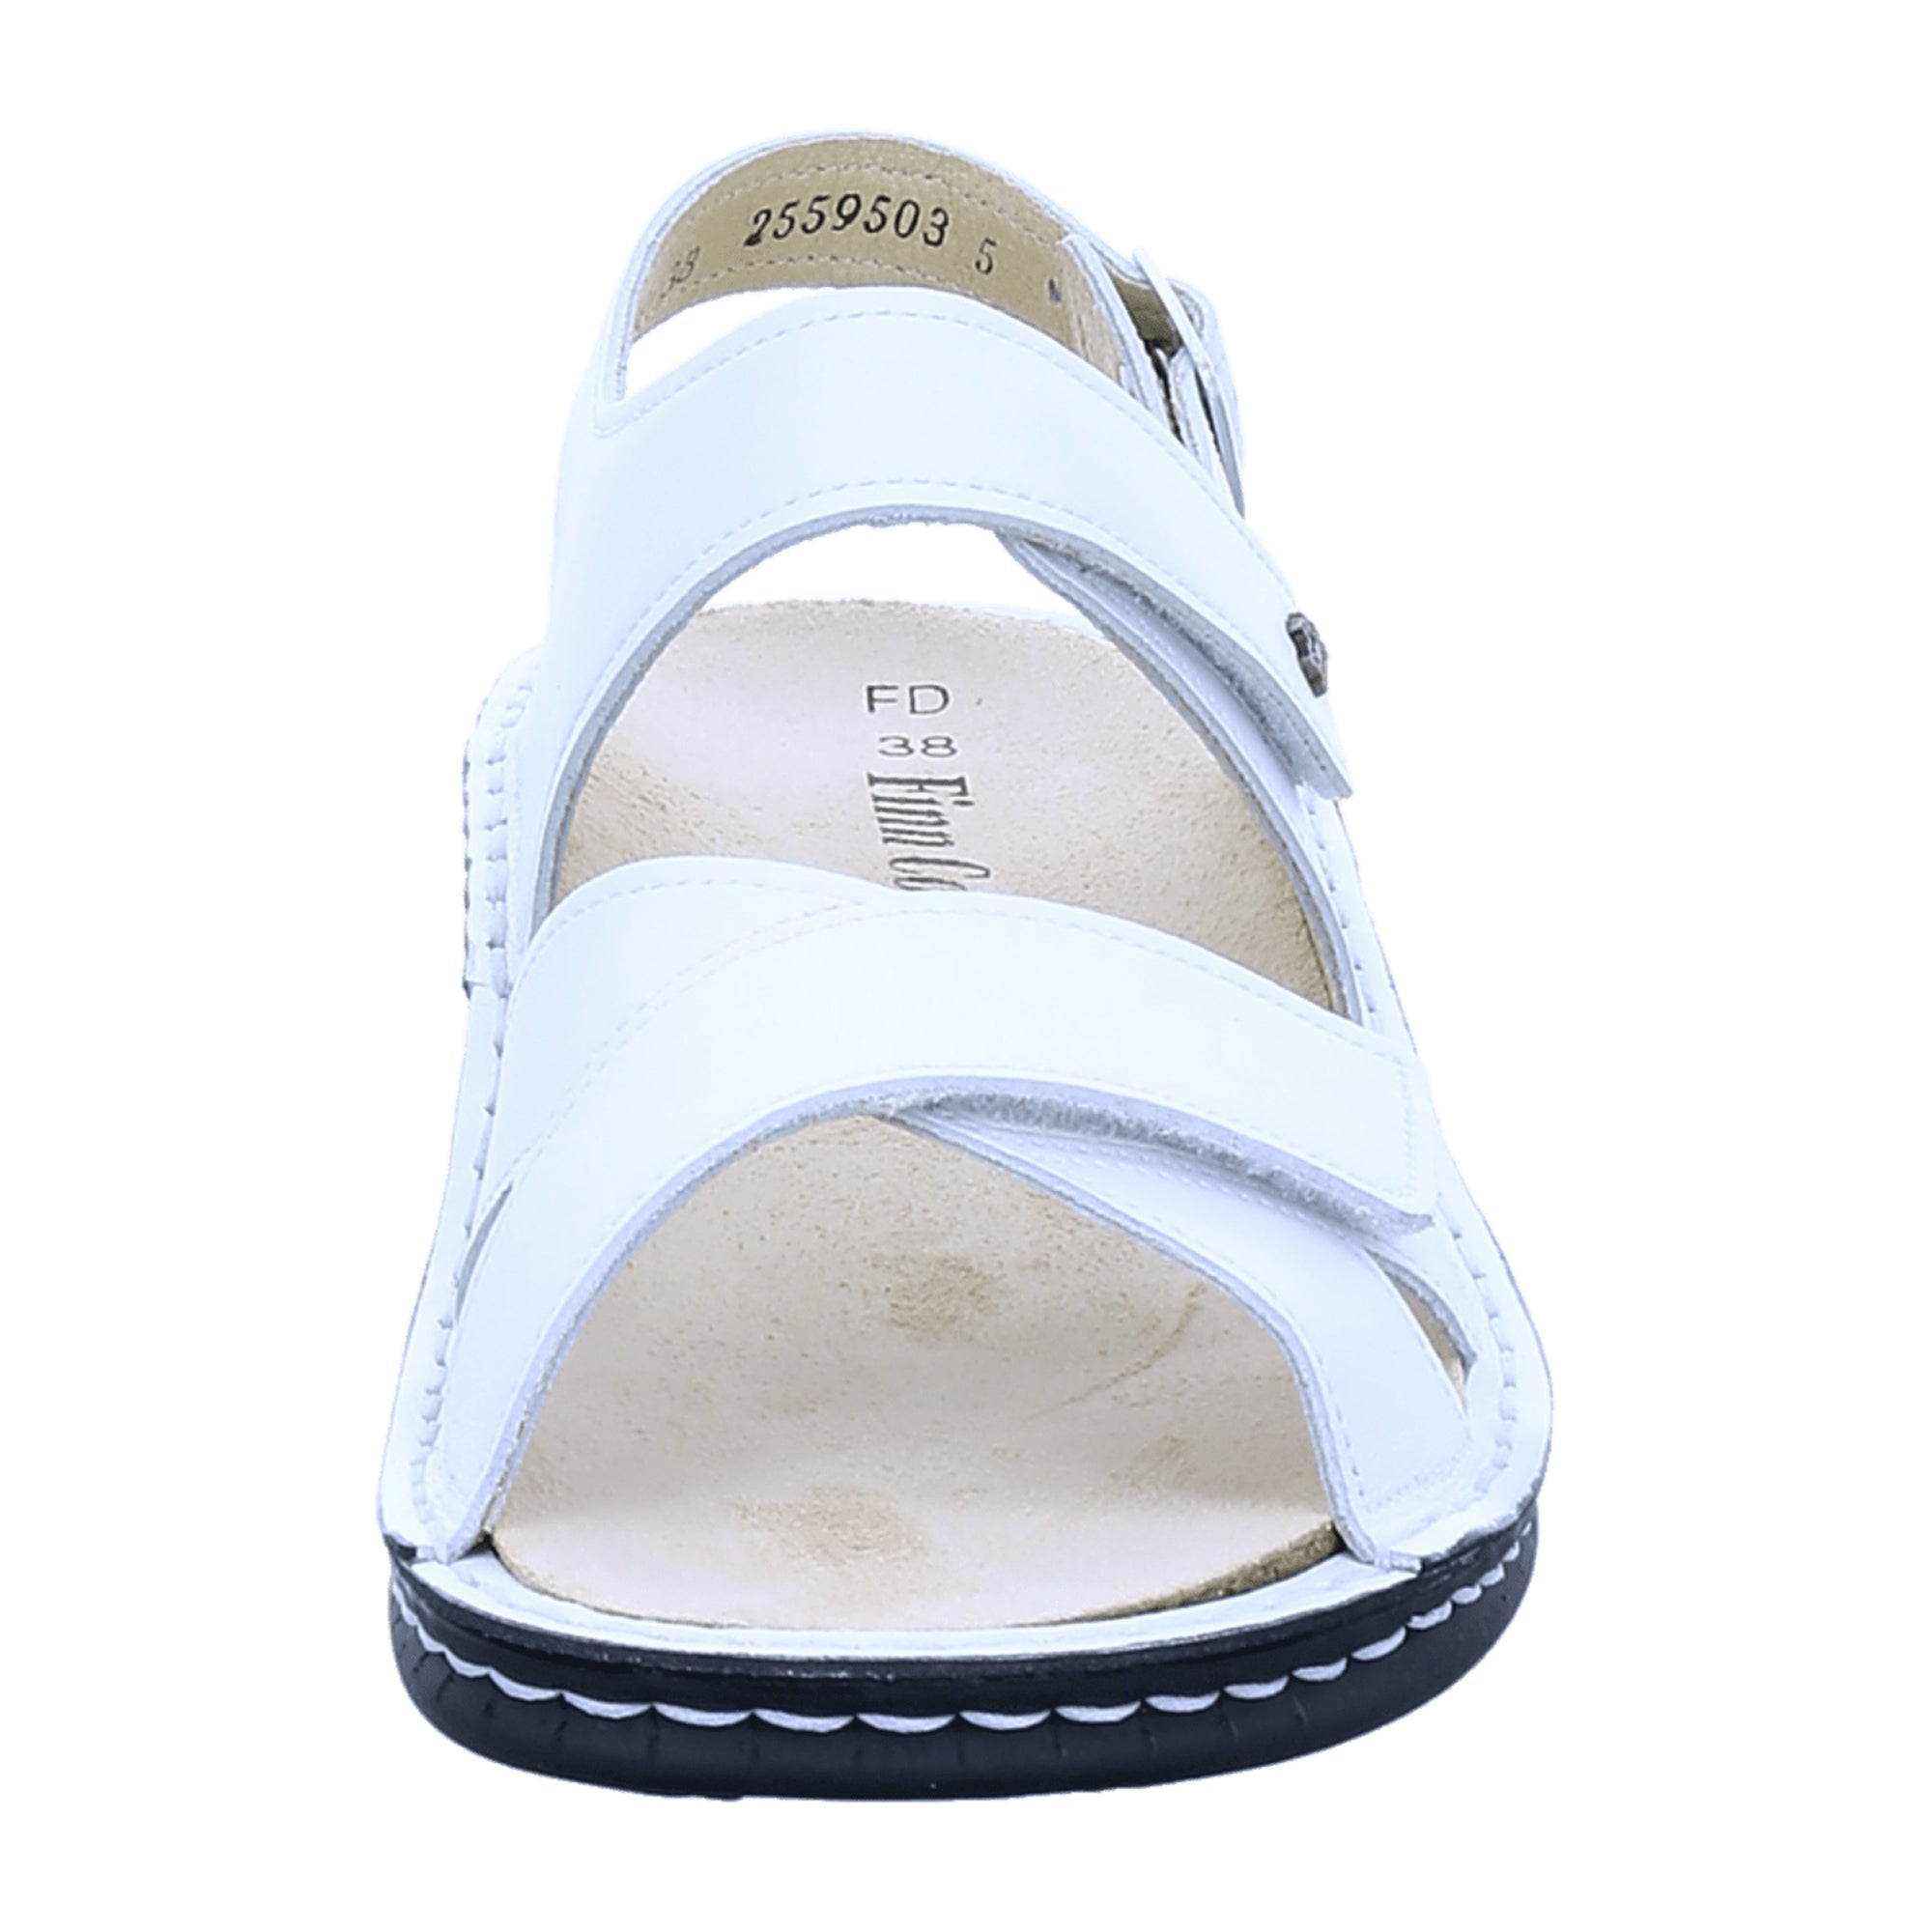 Finn Comfort Women's Comfortable White Sandals - Stylish & Durable